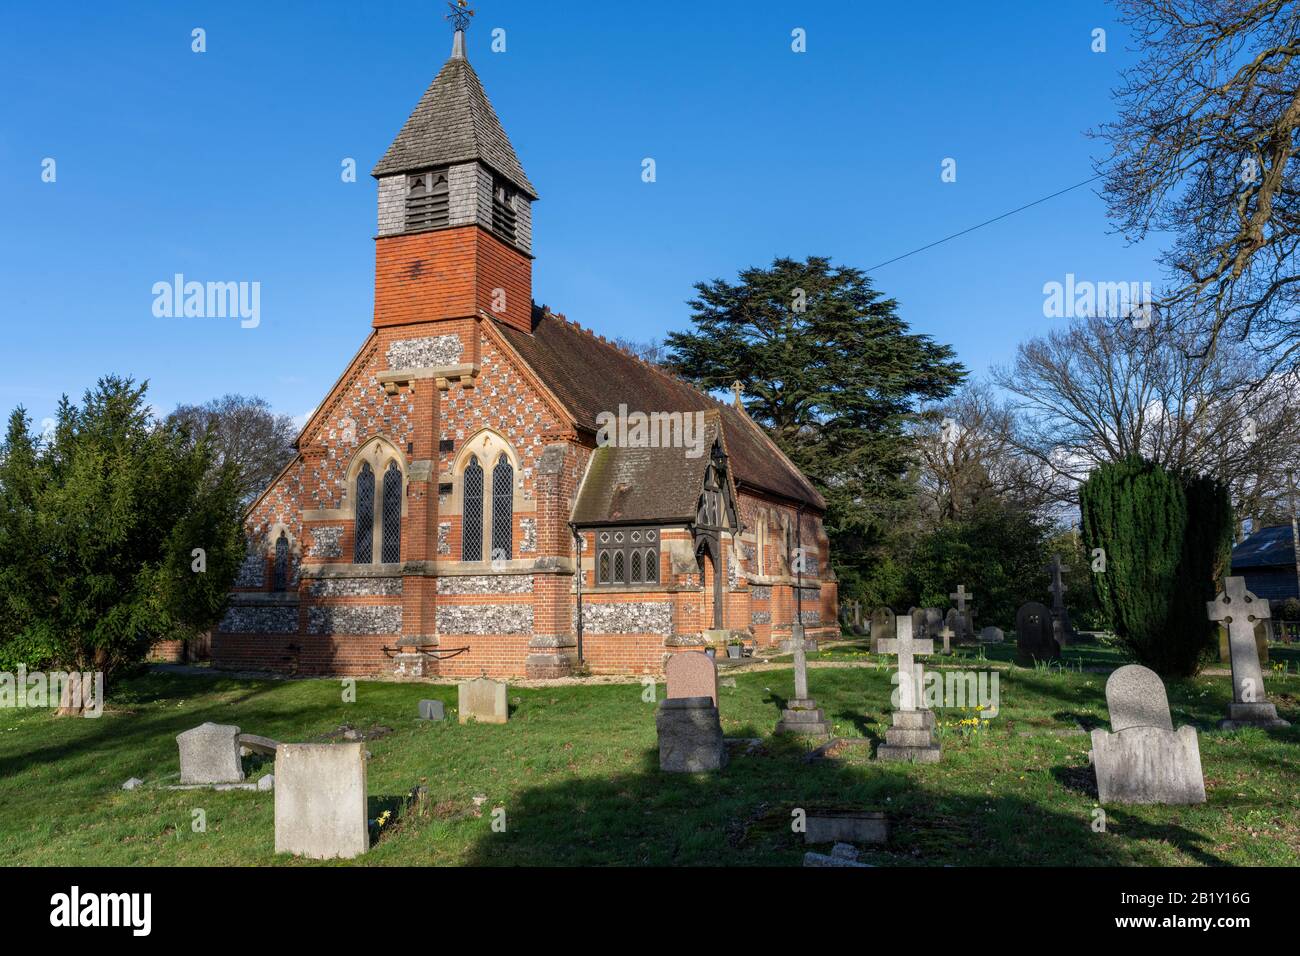 The Church of St Mary the Virgin, Beech Hill, near Reading, Berkshire, England, UK Stock Photo